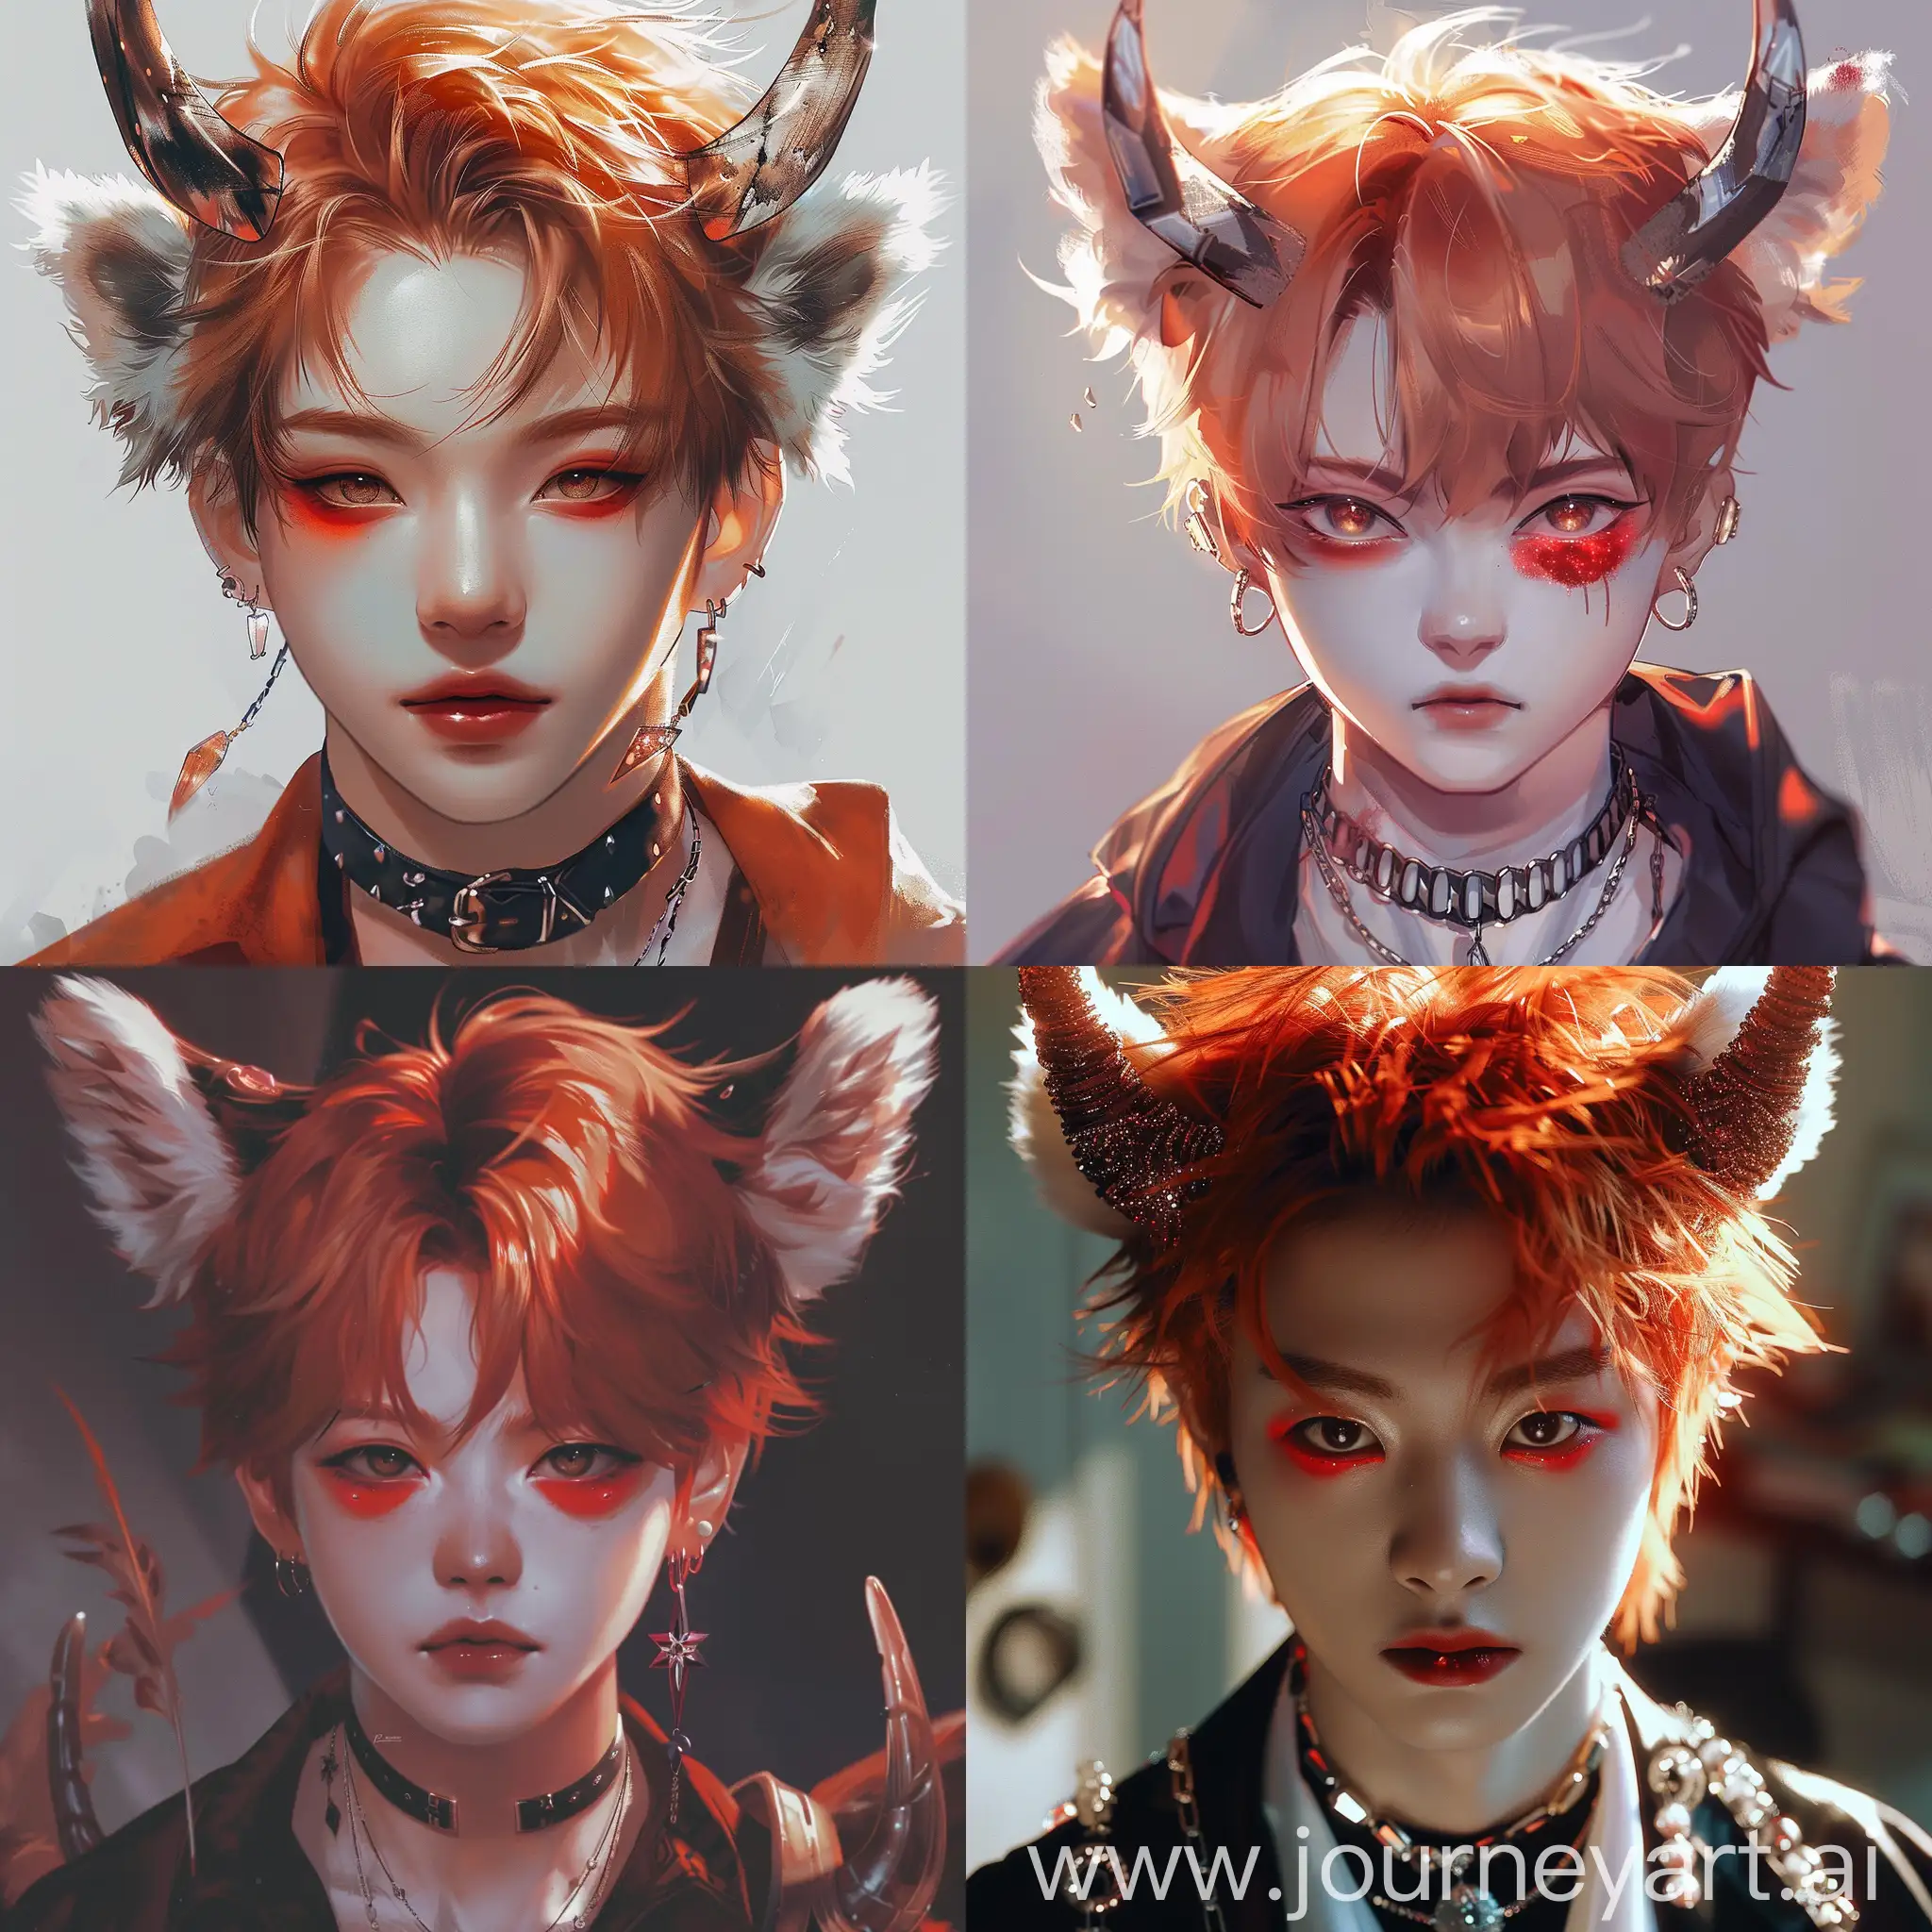 cute, anime, red panda, young adult male, kpop, sunstone crystal horns, red eye shadow, korean, stylish